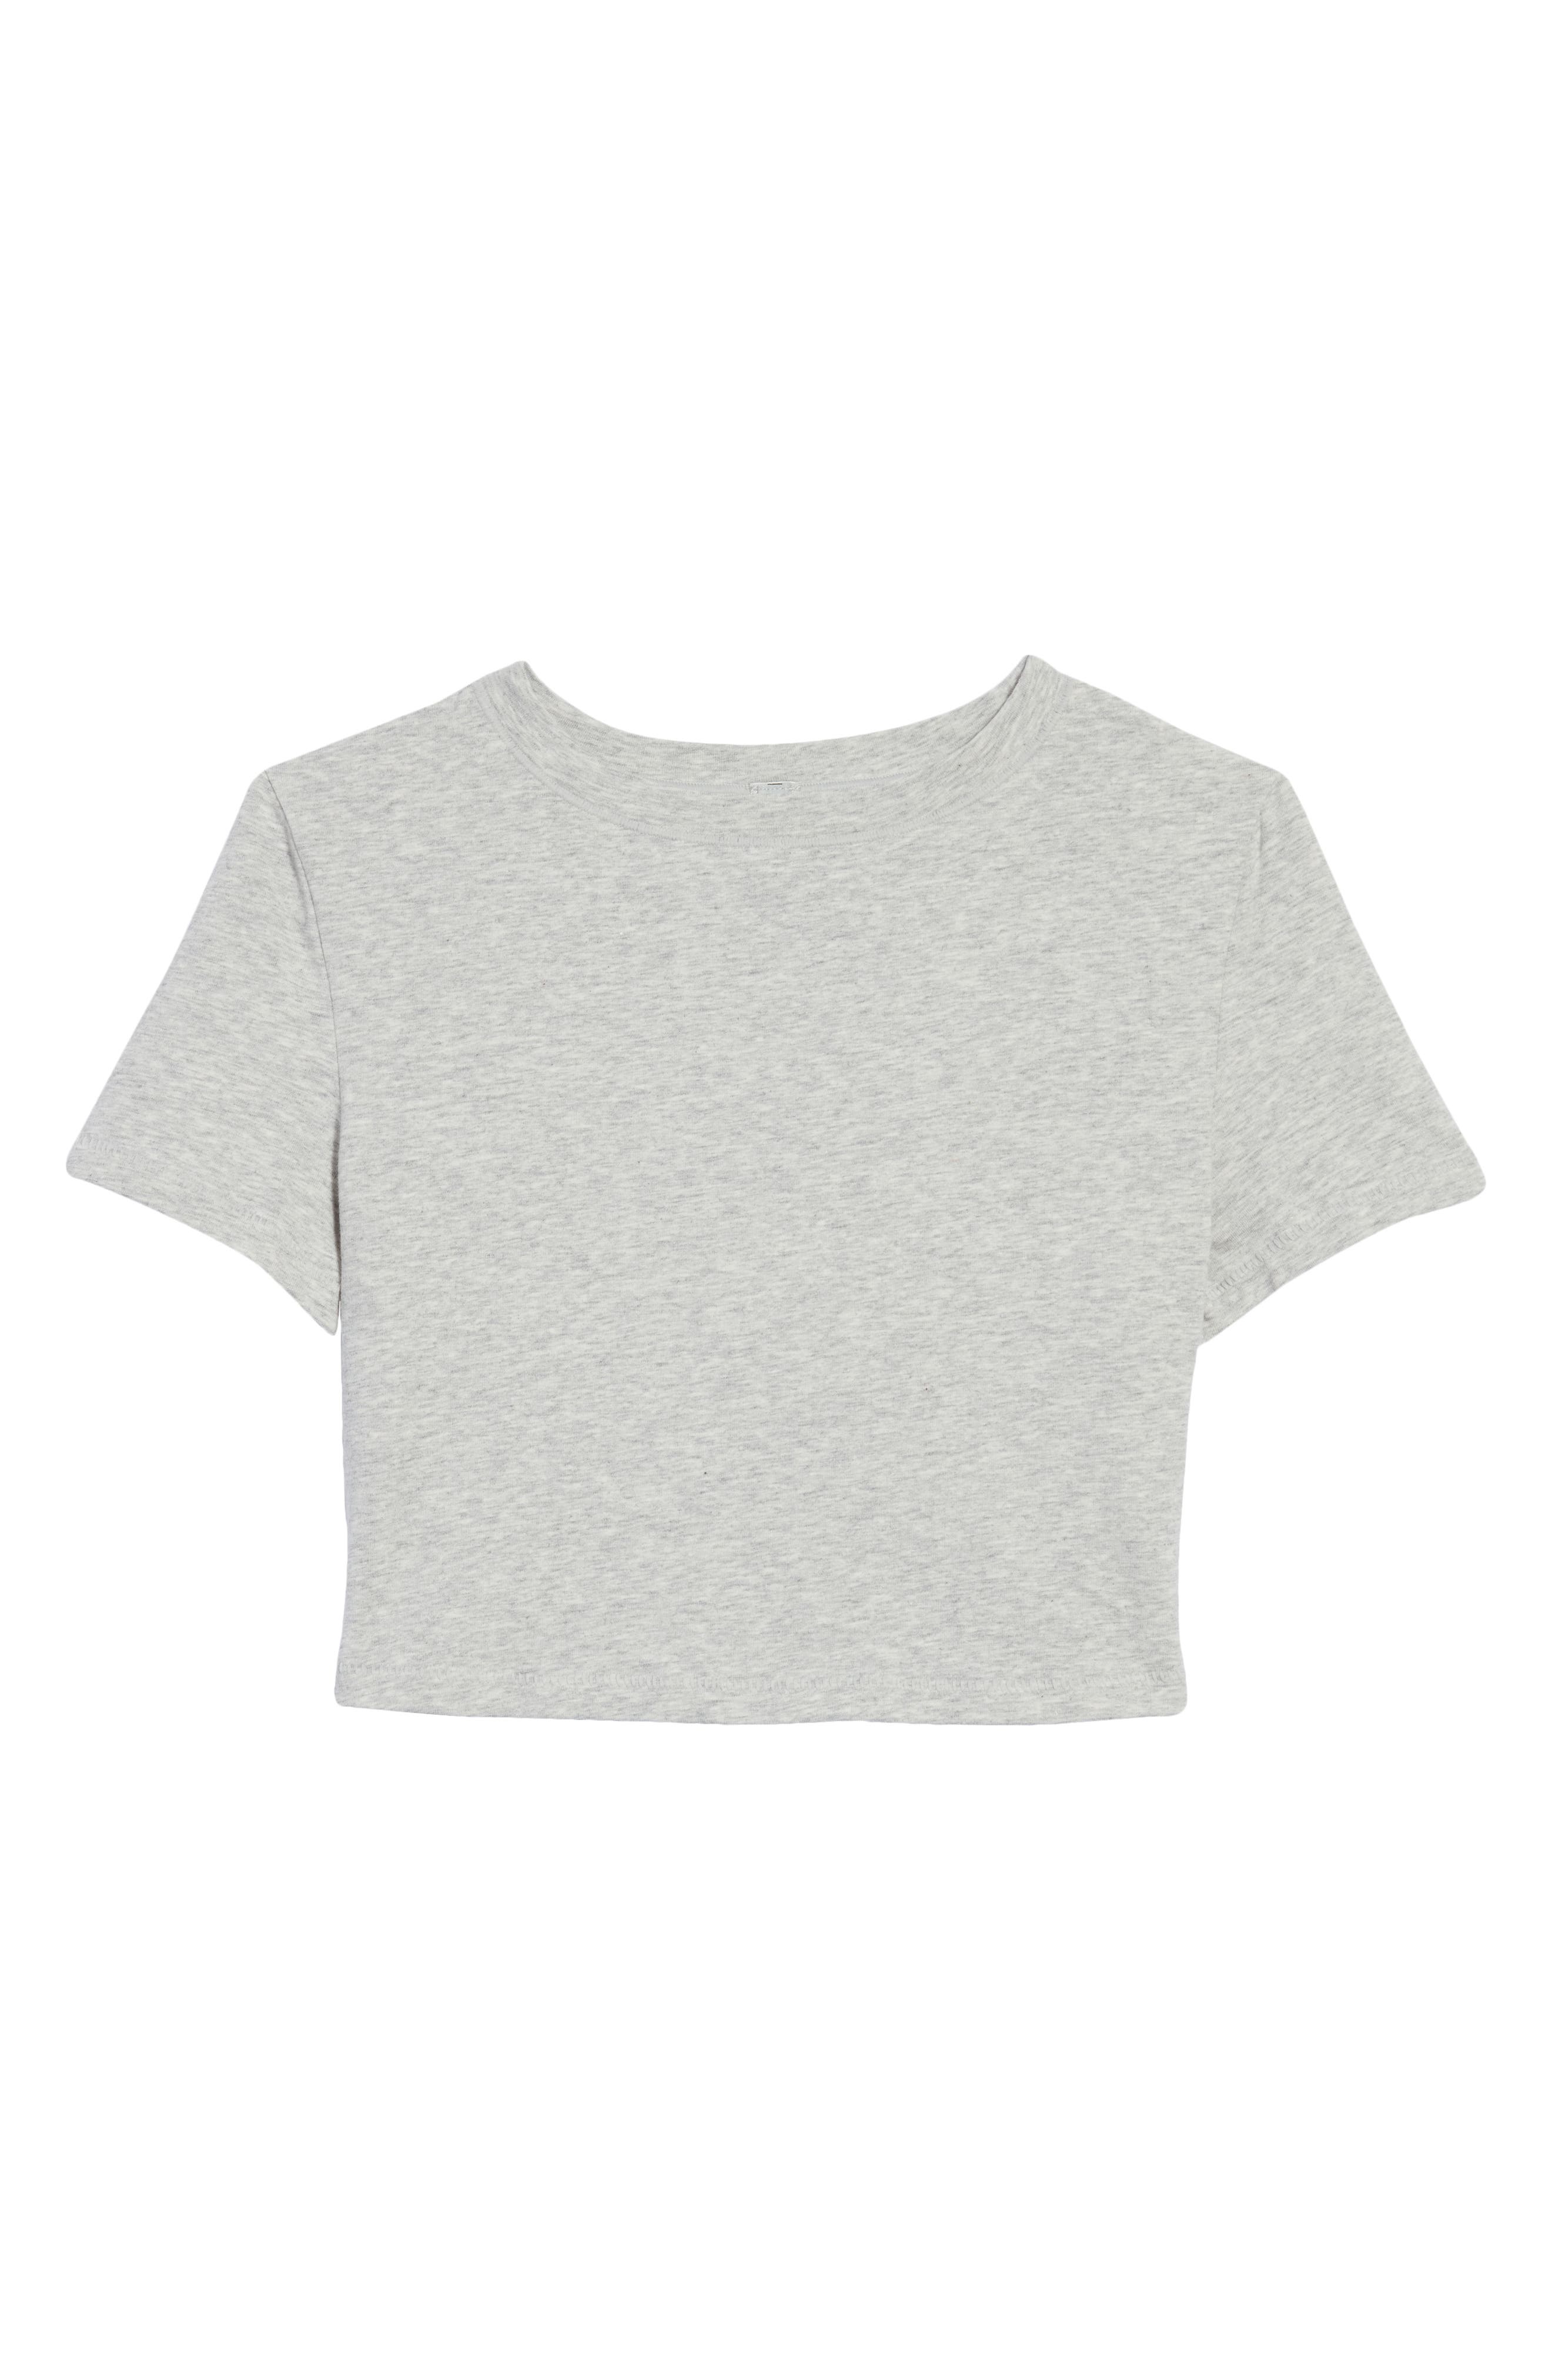 Black Cotton Jersey Super Cropped T-Shirt